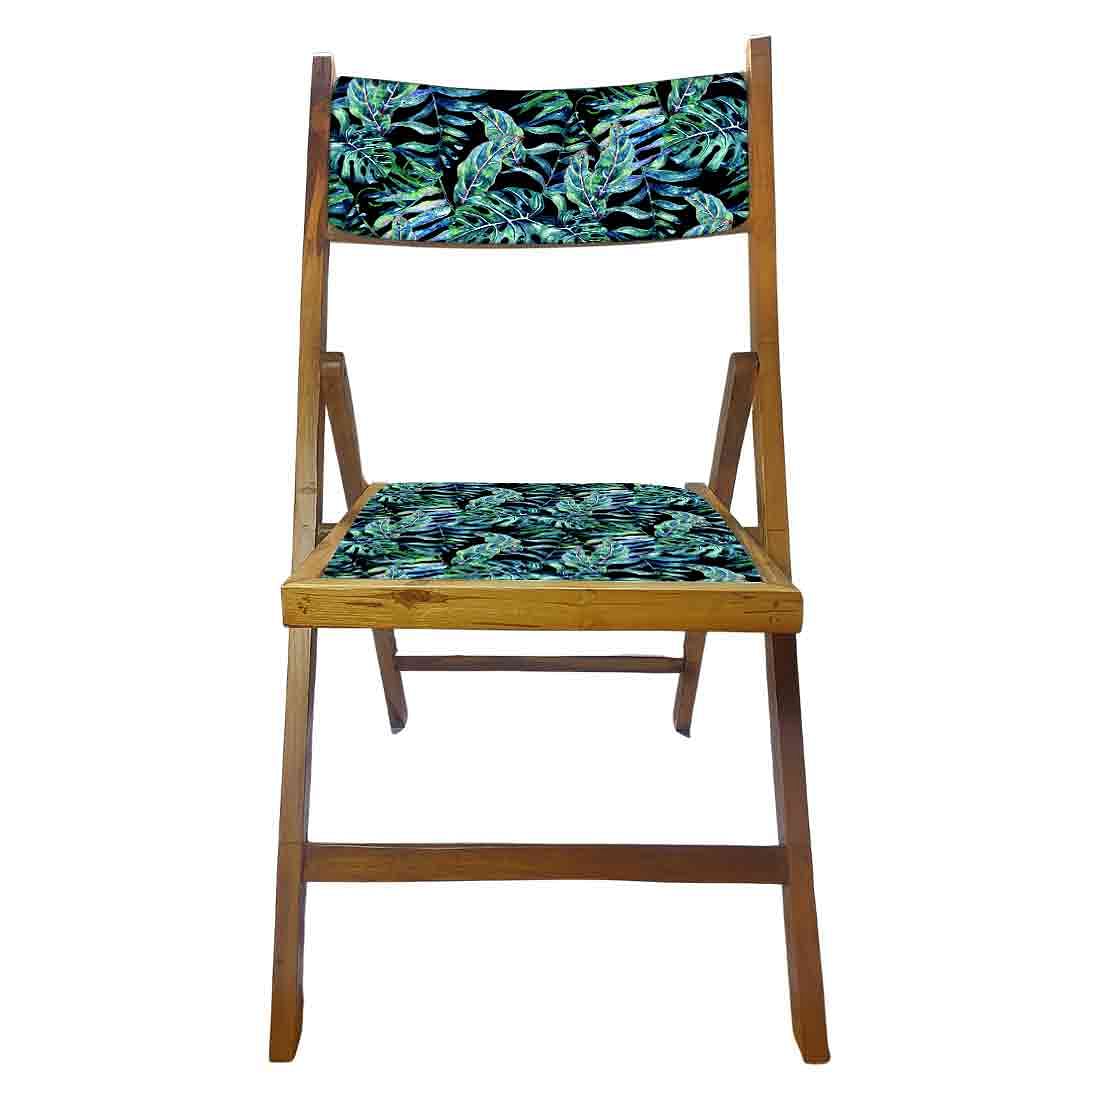 Nutcase Wooden Chair For Living Room  -  Black Green Tropical Leaves Nutcase